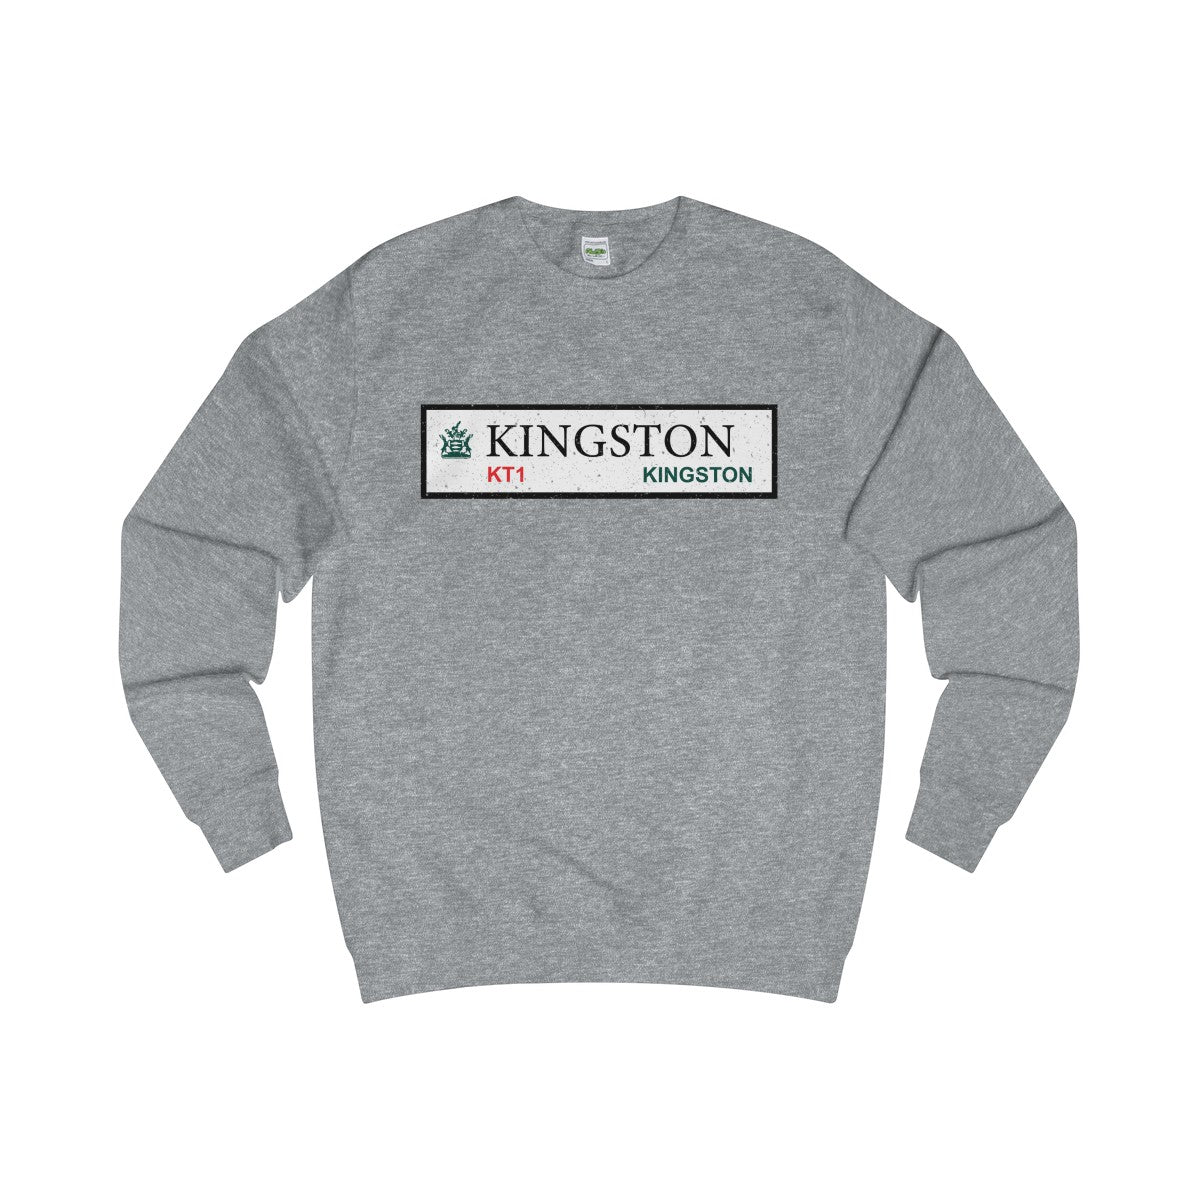 Kingston Road Sign KT1 Sweater